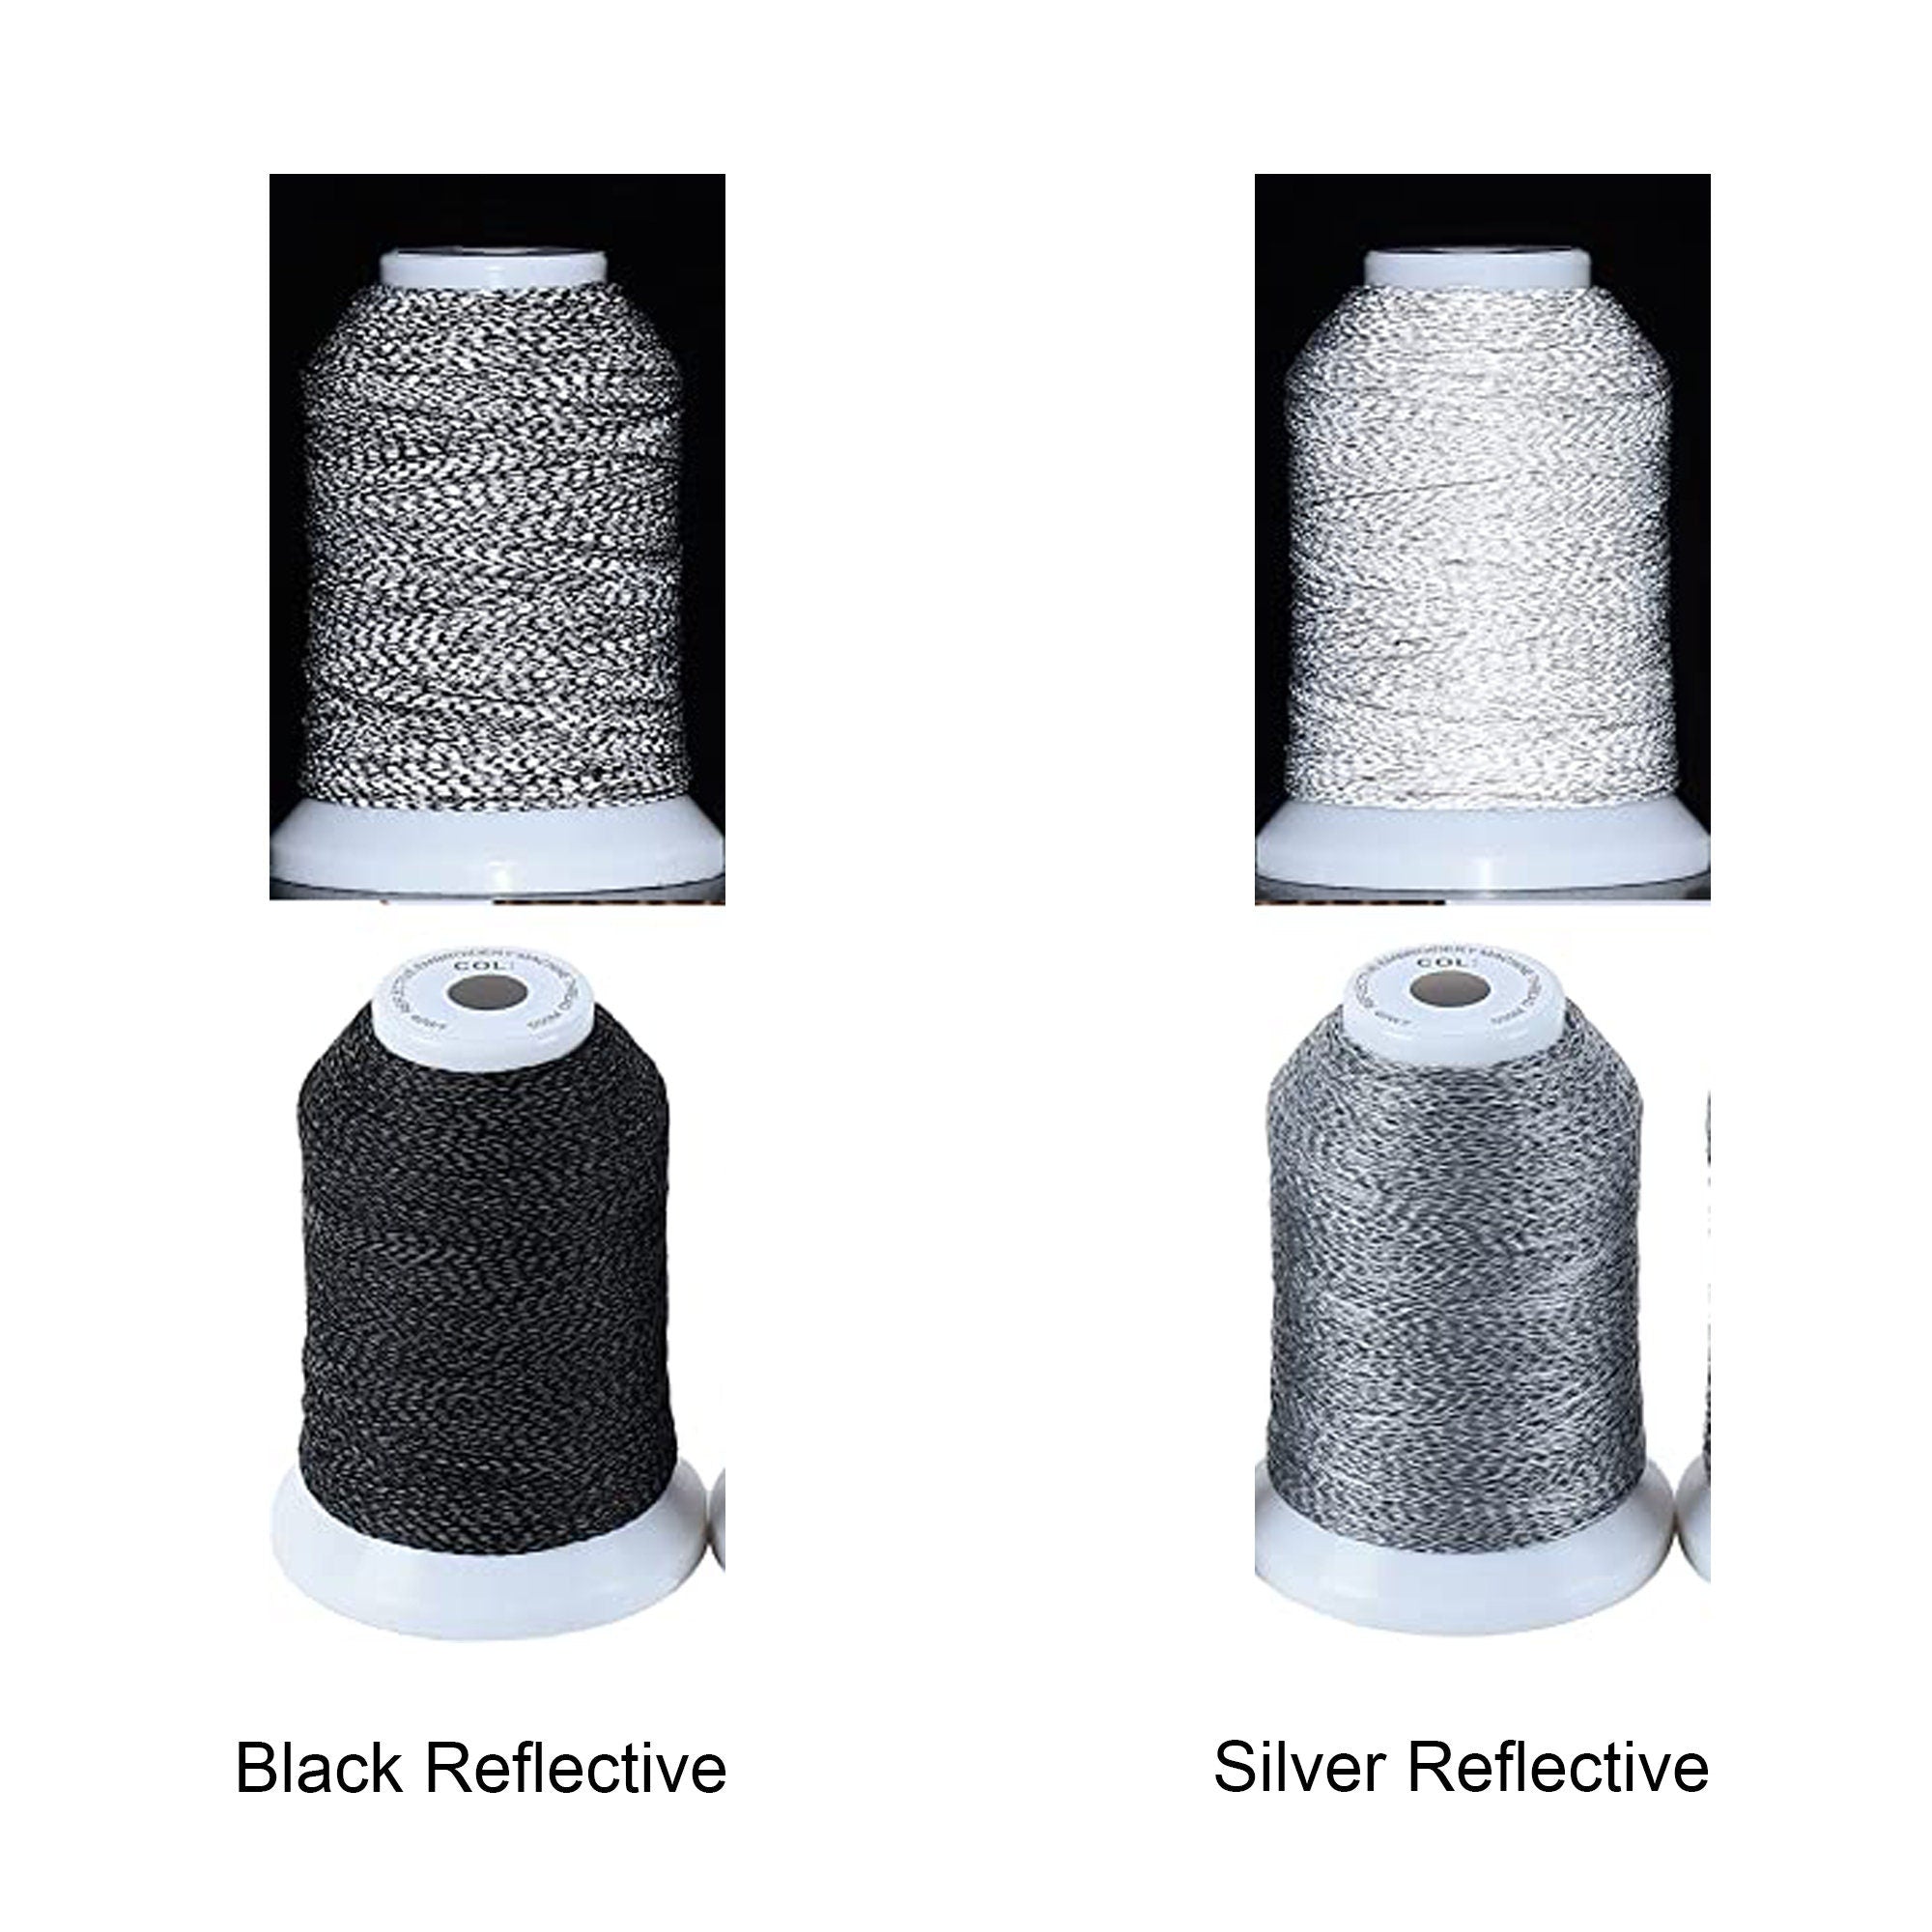 Thread Upgrade, Metallic Thread, Glow in the Dark, Reflective Thread, –  Tasking Through LIfe